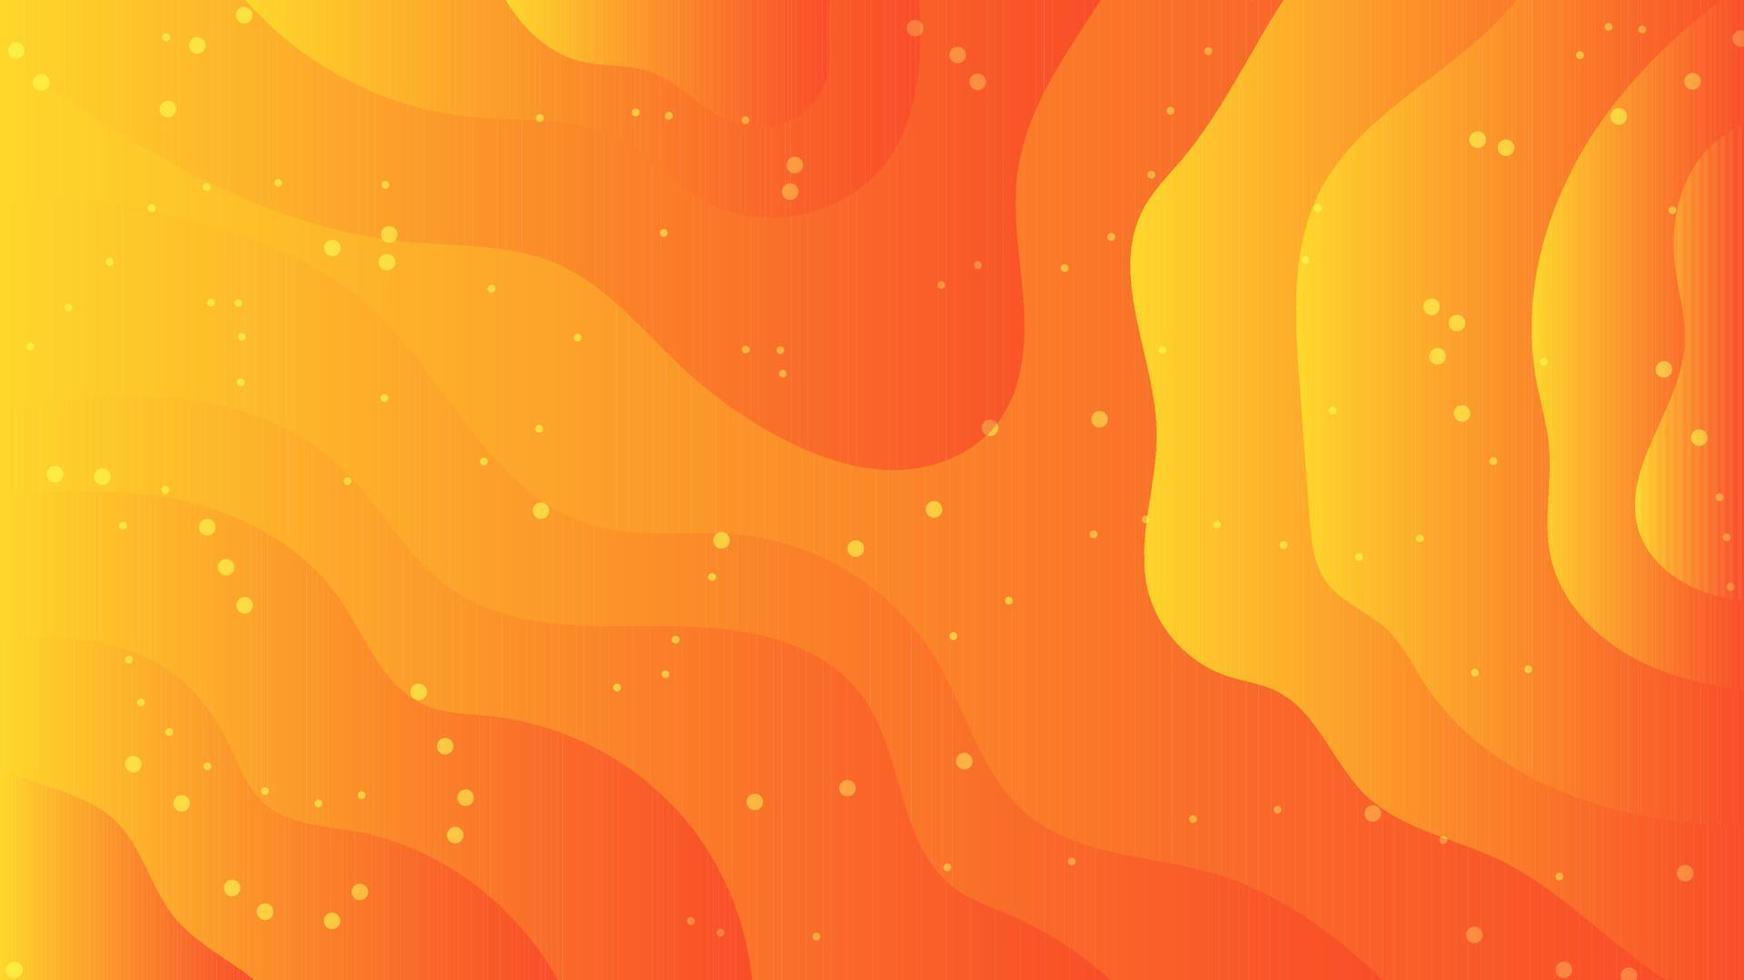 Abstract waves overlap textured orange background vector